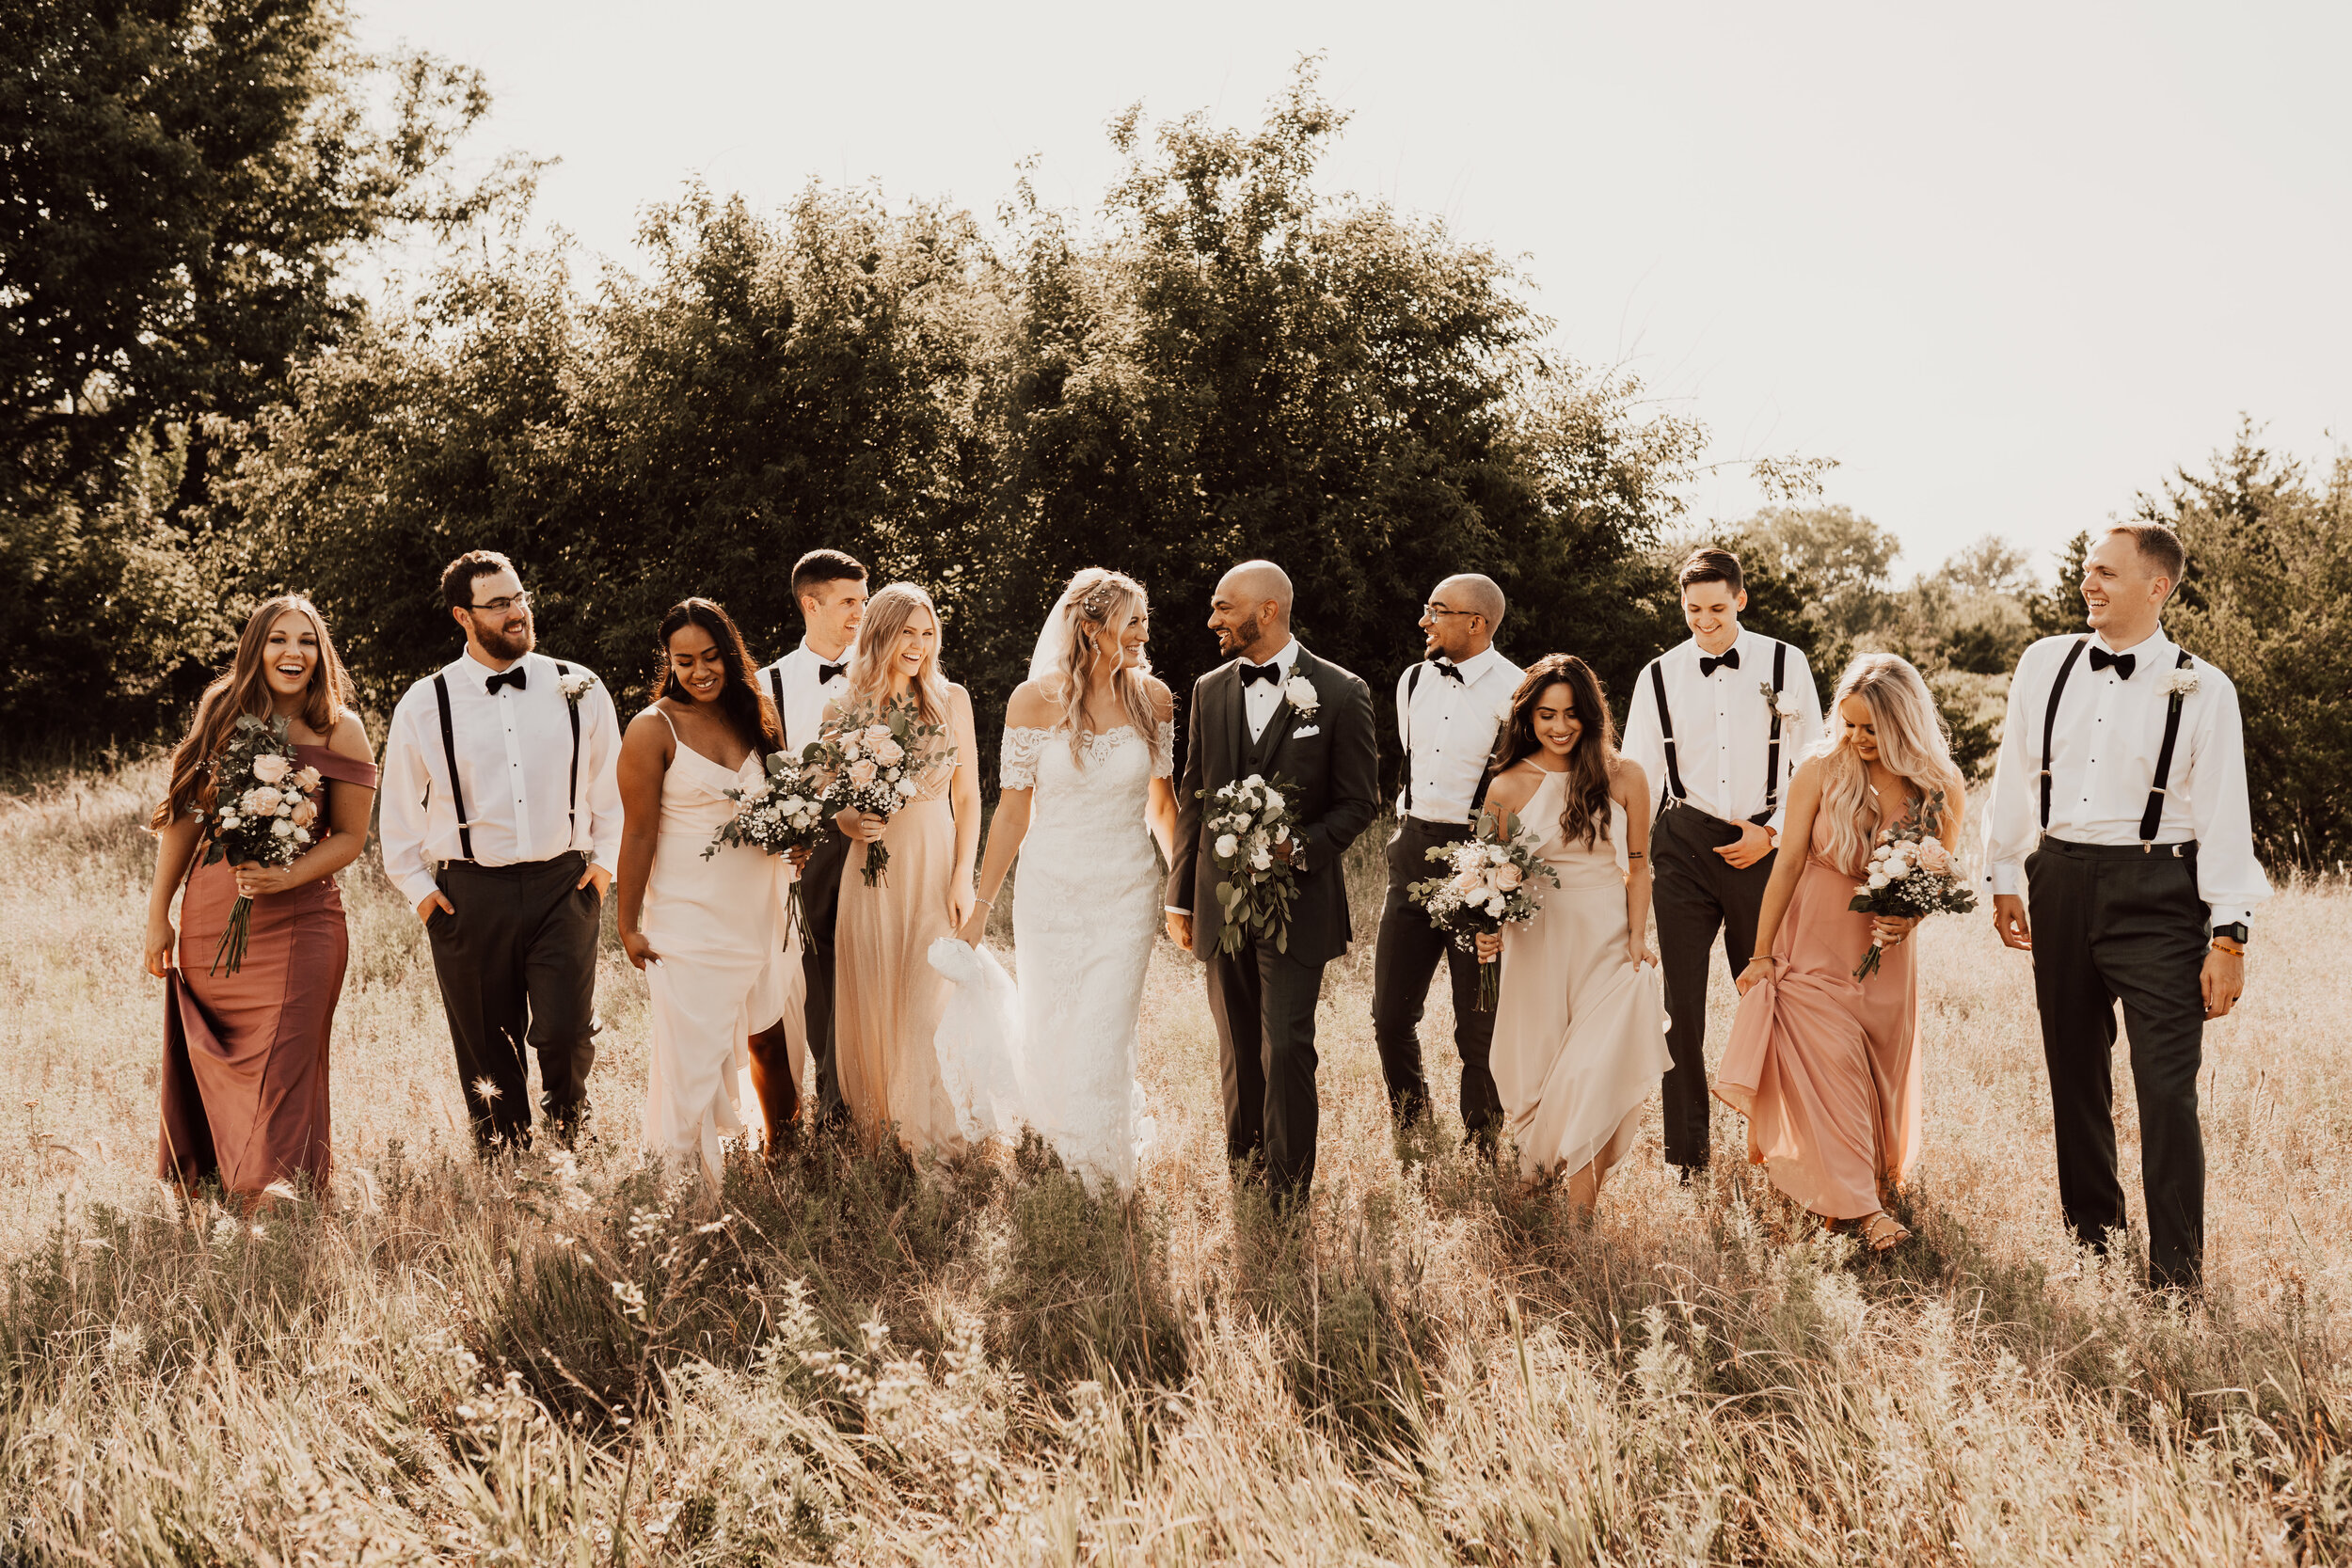 Hayley + Lorenzo - Summer White Chapel Wedding at Stone Hill Barn in Augusta, Kansas124.jpg